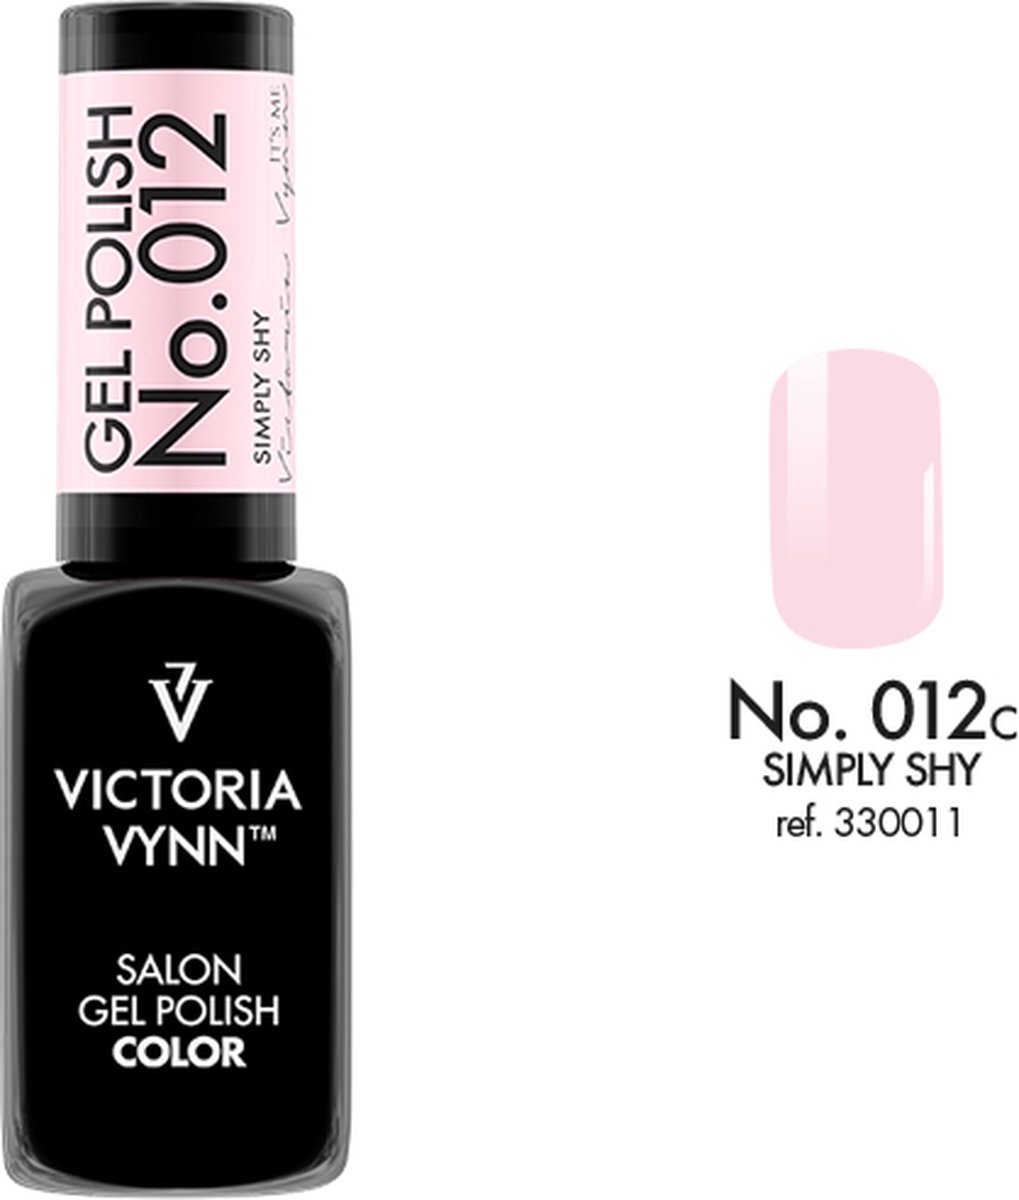 VICTORIA VYNN™ Victoria Vynn – Salon Gelpolish 012 Simply Shy roze gel polish gellak nagels nagelverzorging nagelstyliste uv led nagelstylist callance